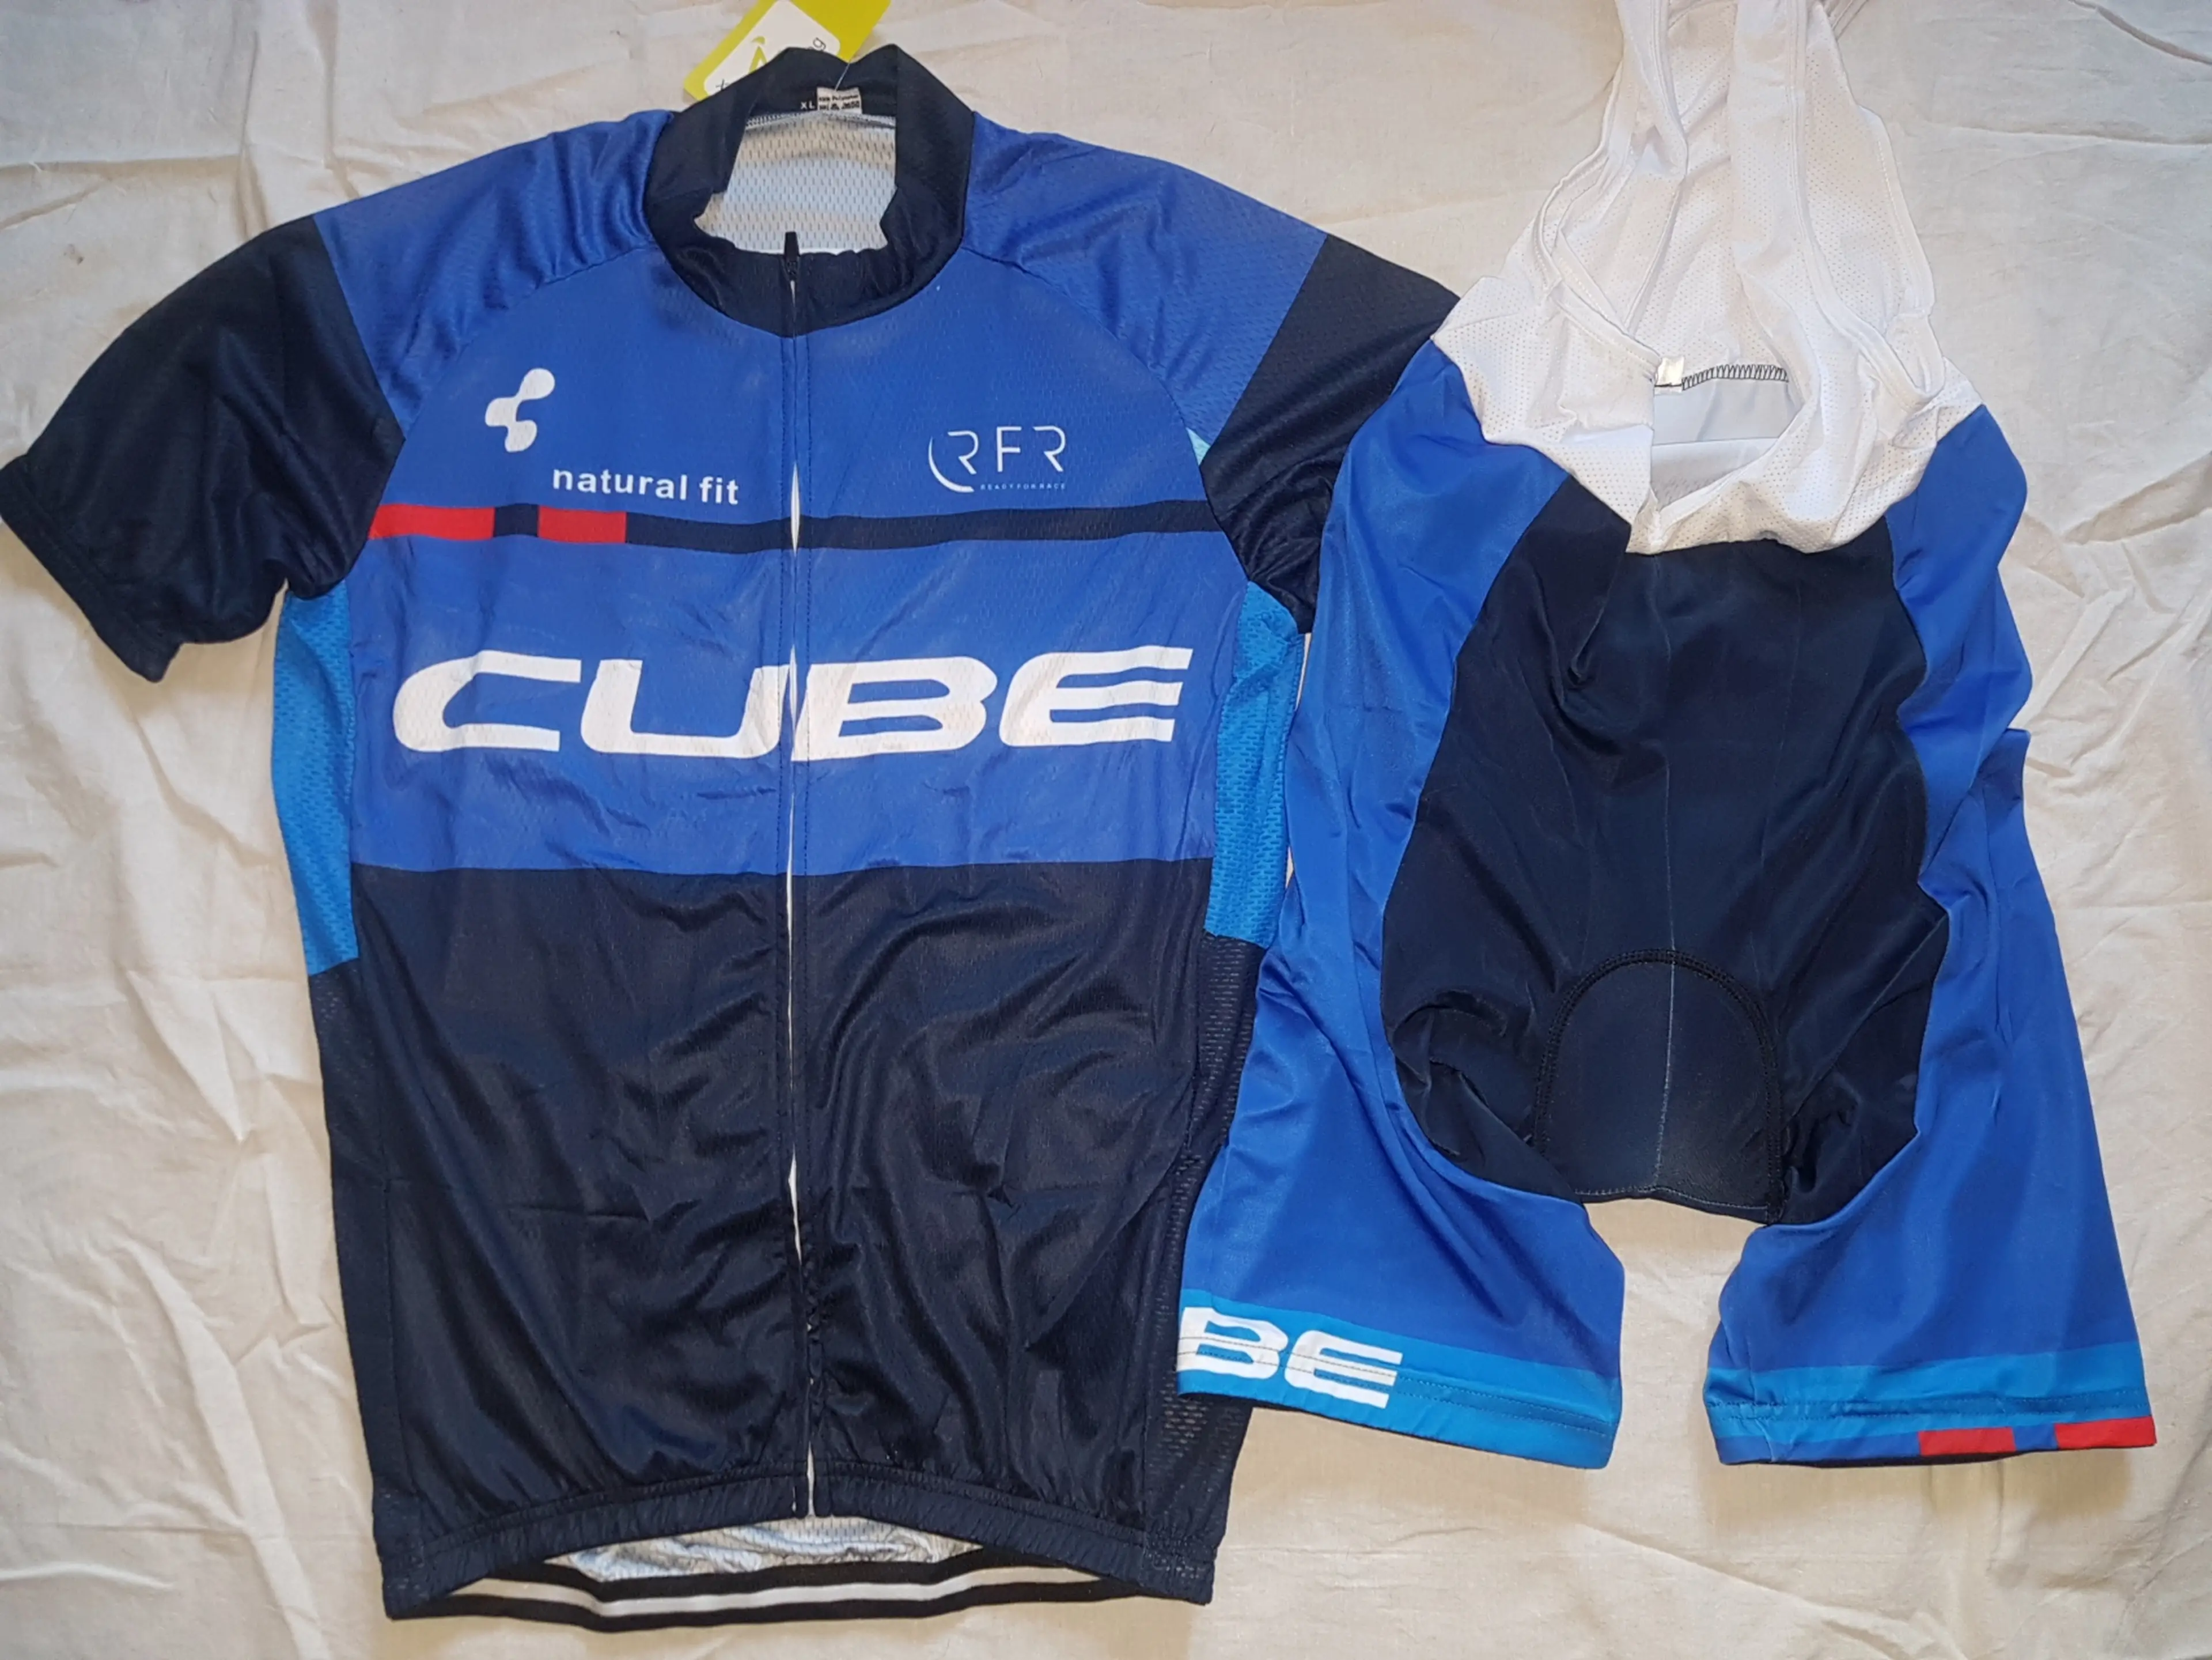 Image Echipament ciclism Cube blue NOU set tricou si pantaloni cu bretele